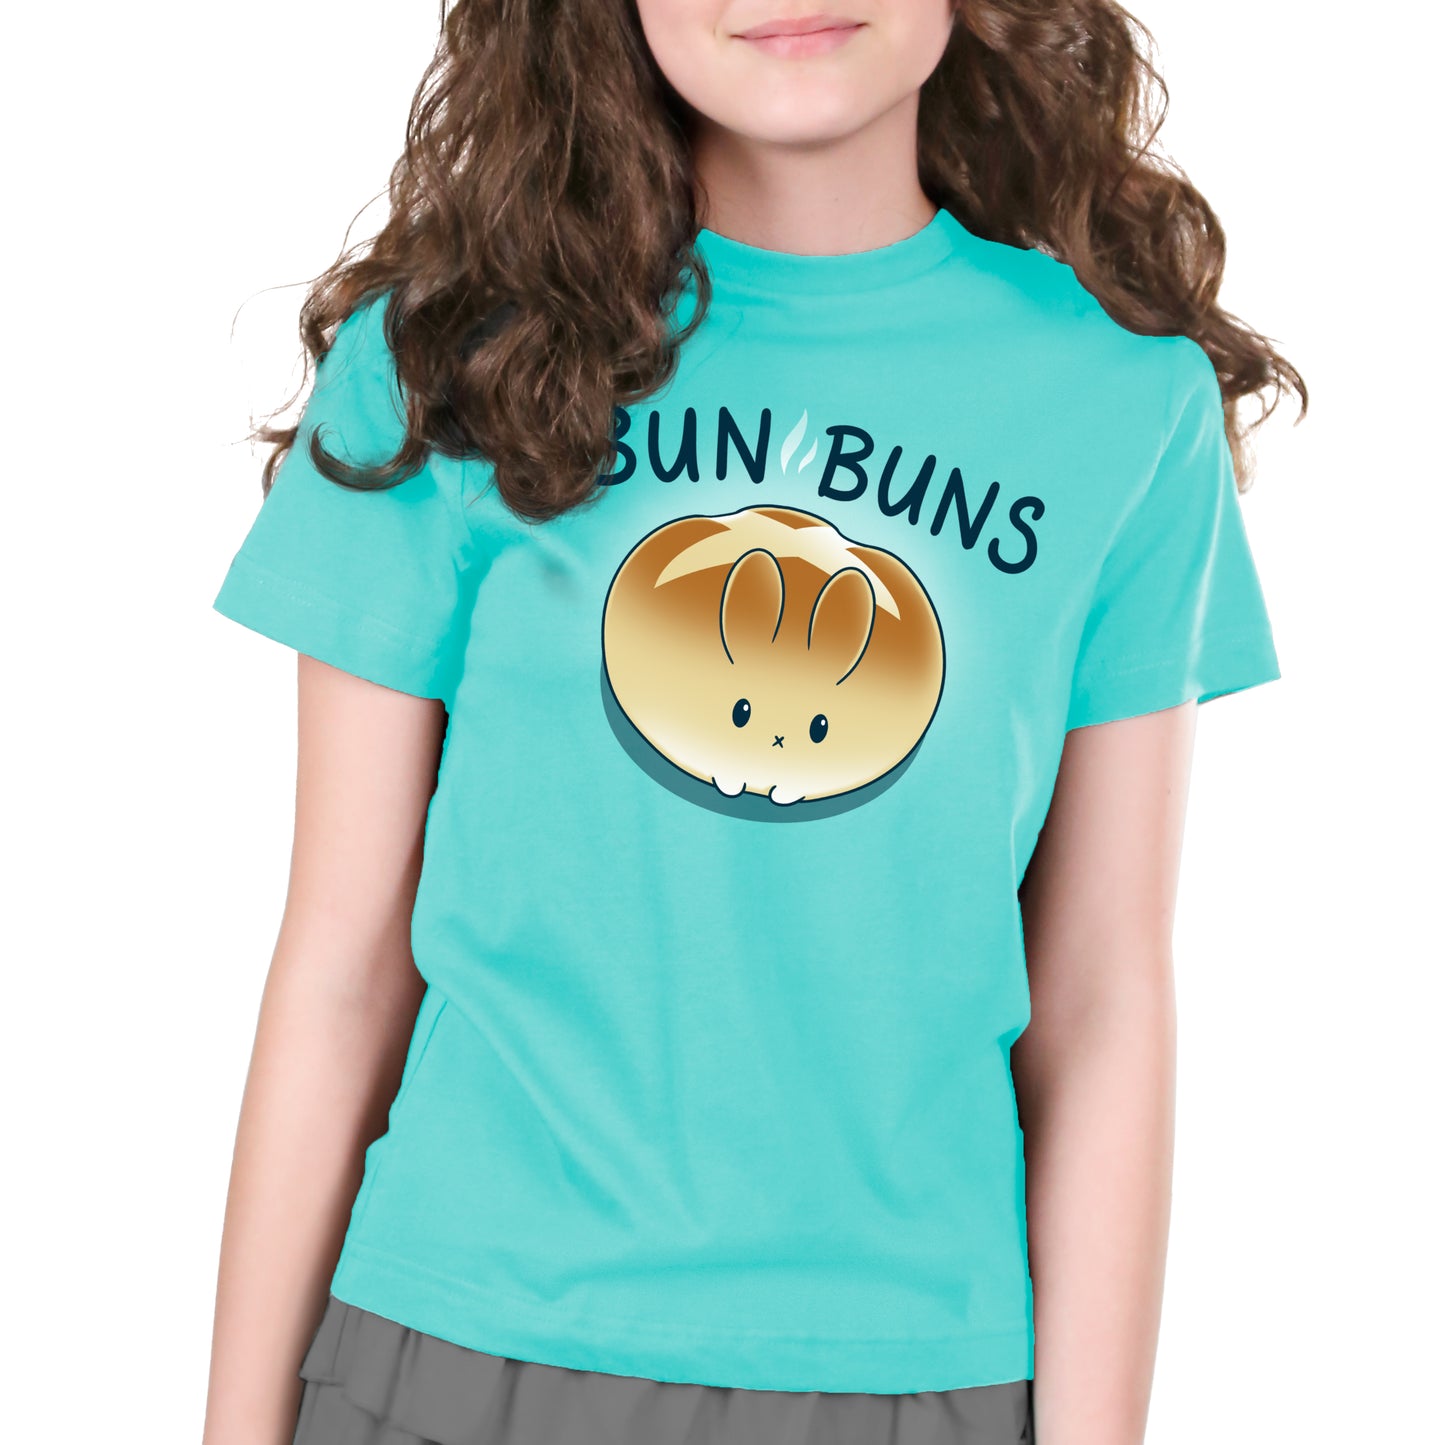 A girl wearing a blue t-shirt that says TeeTurtle Bun Buns.